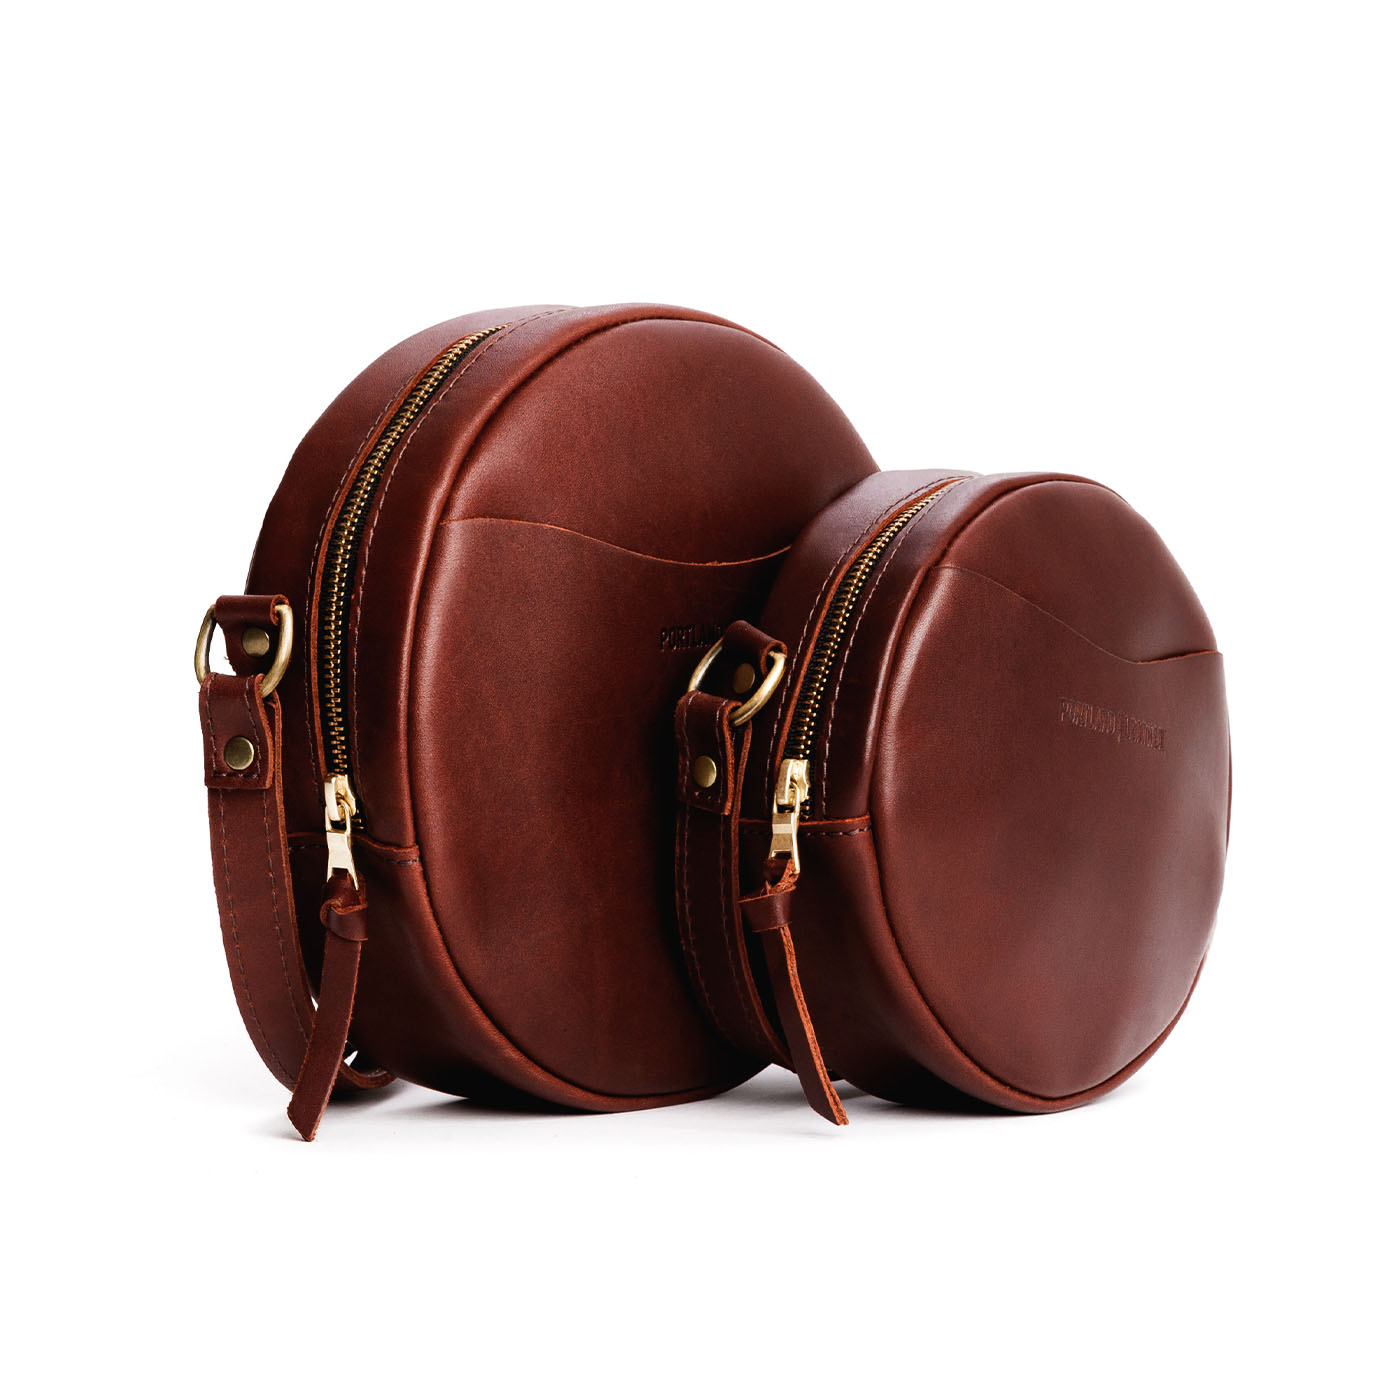 All Color: Cognac | leather handmade circle purse